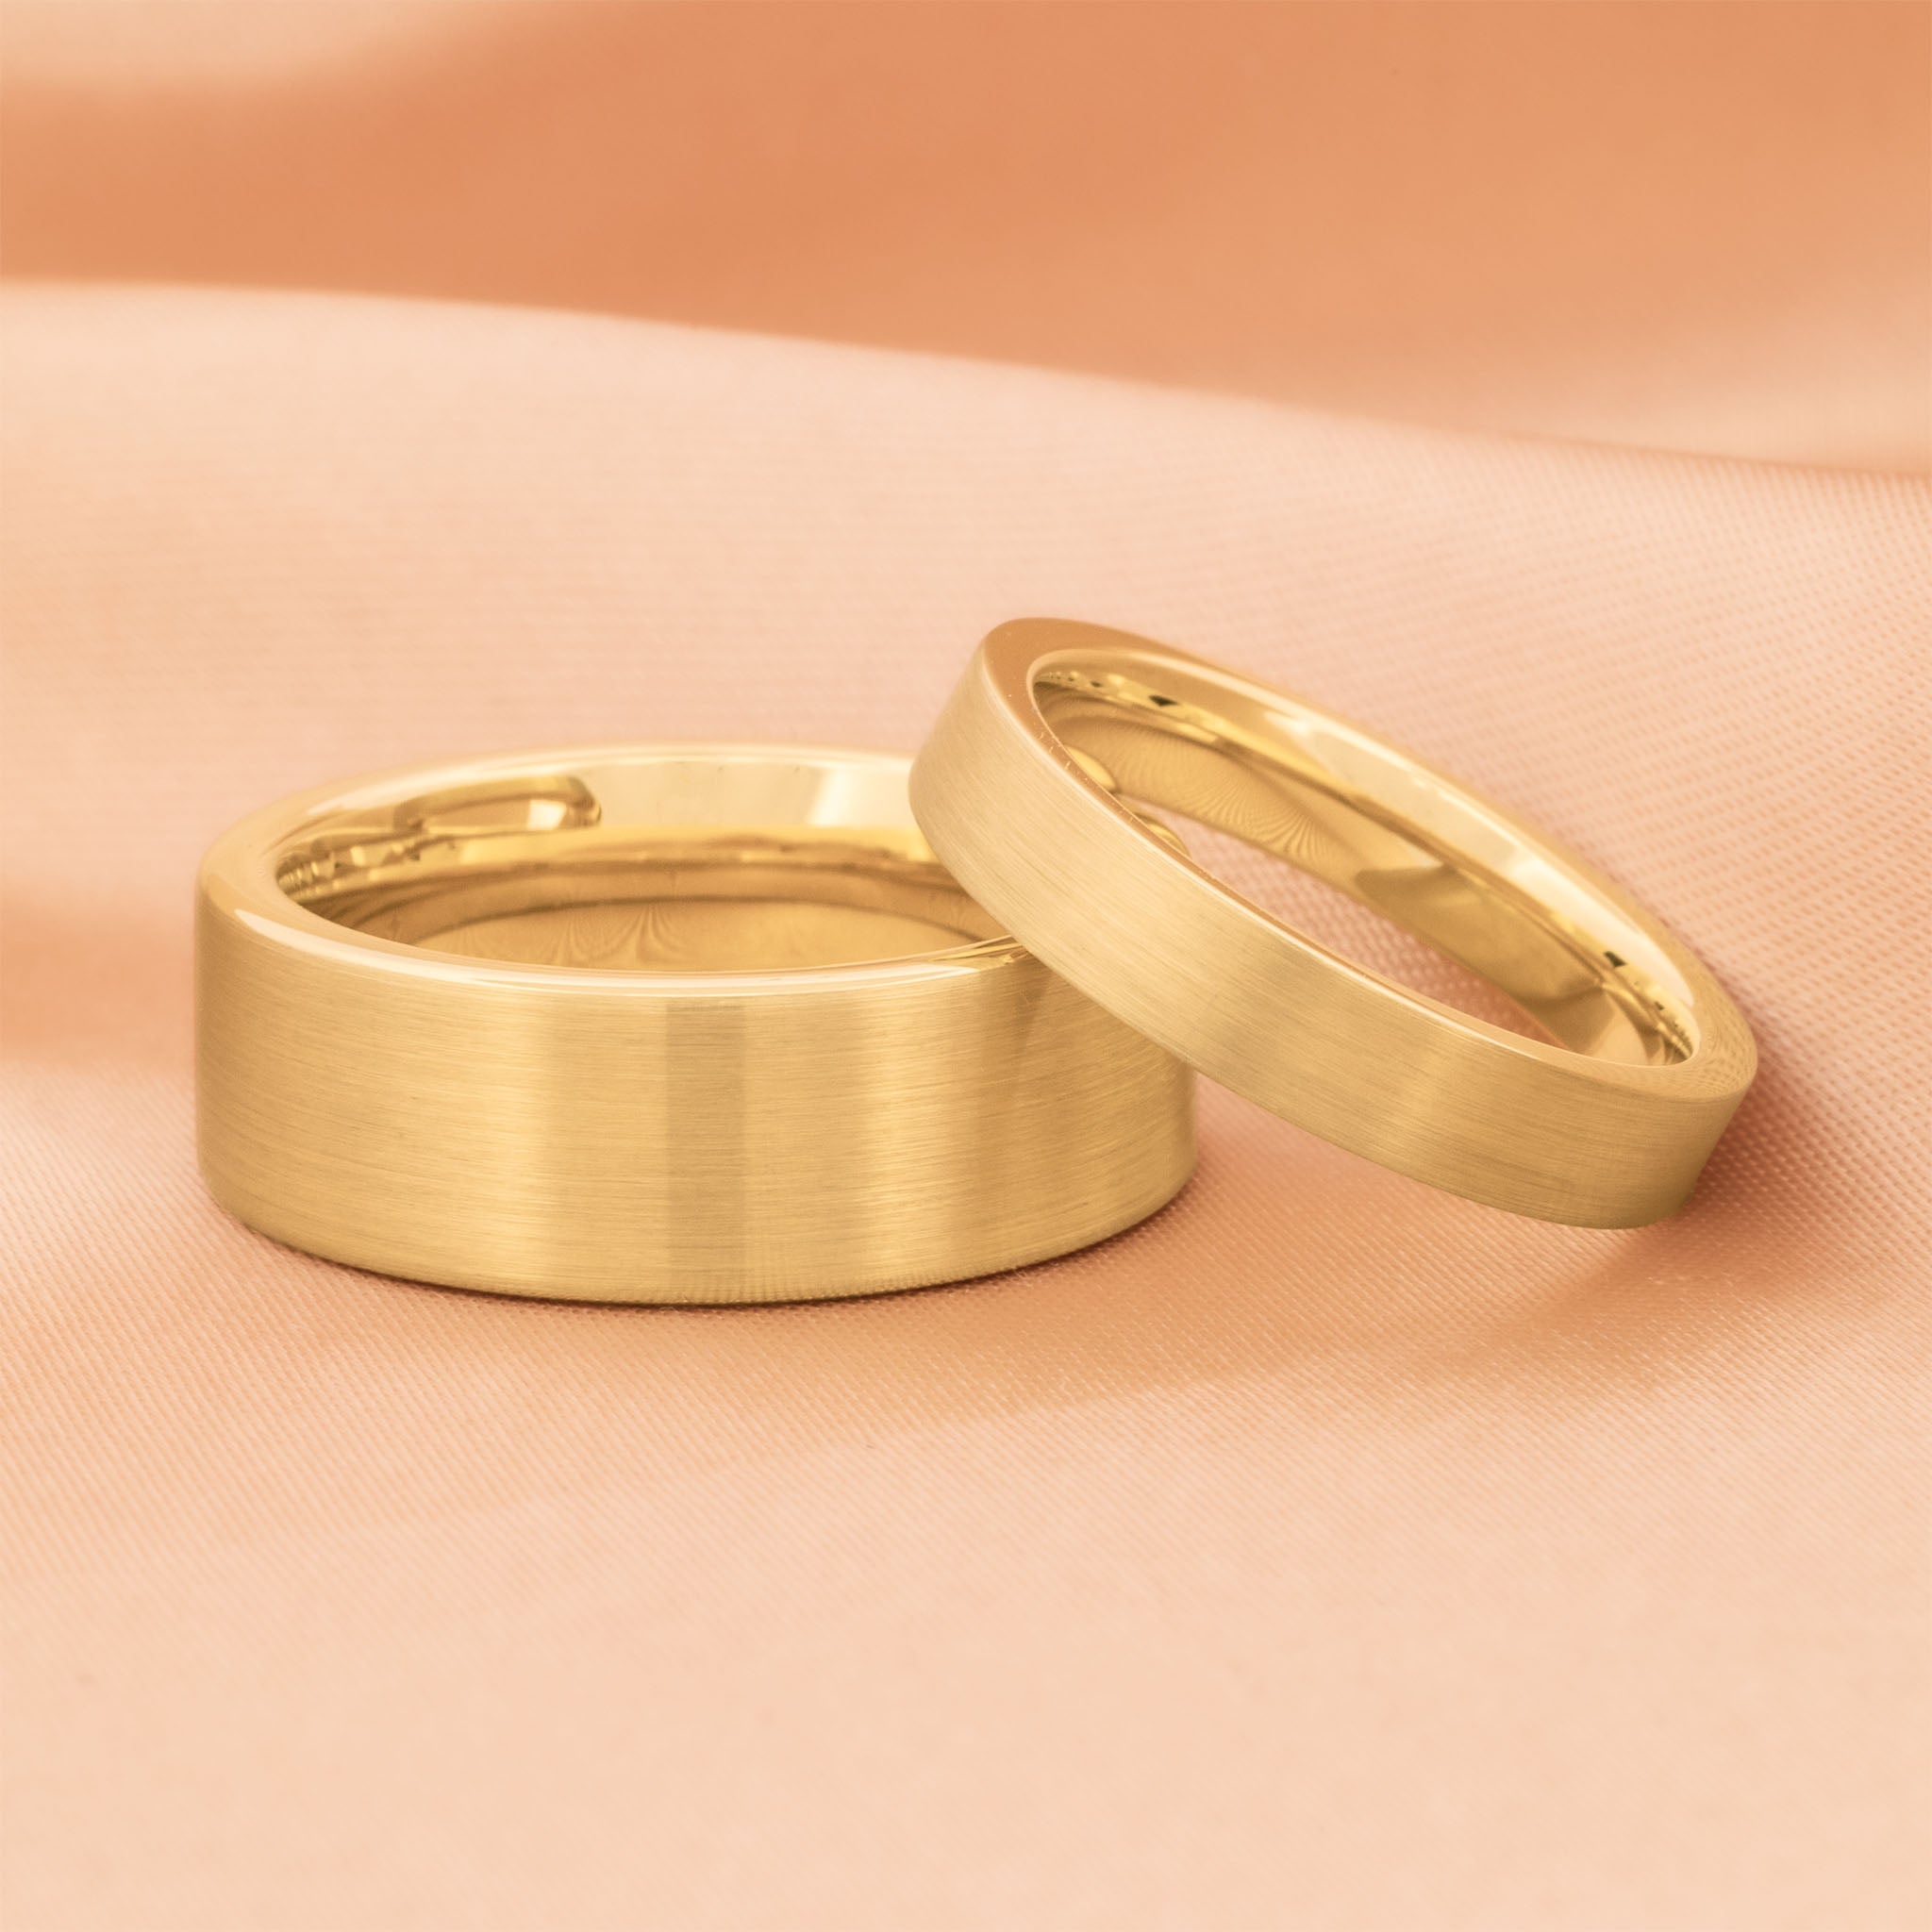 Golden Couple Ring Set Stainless Steel